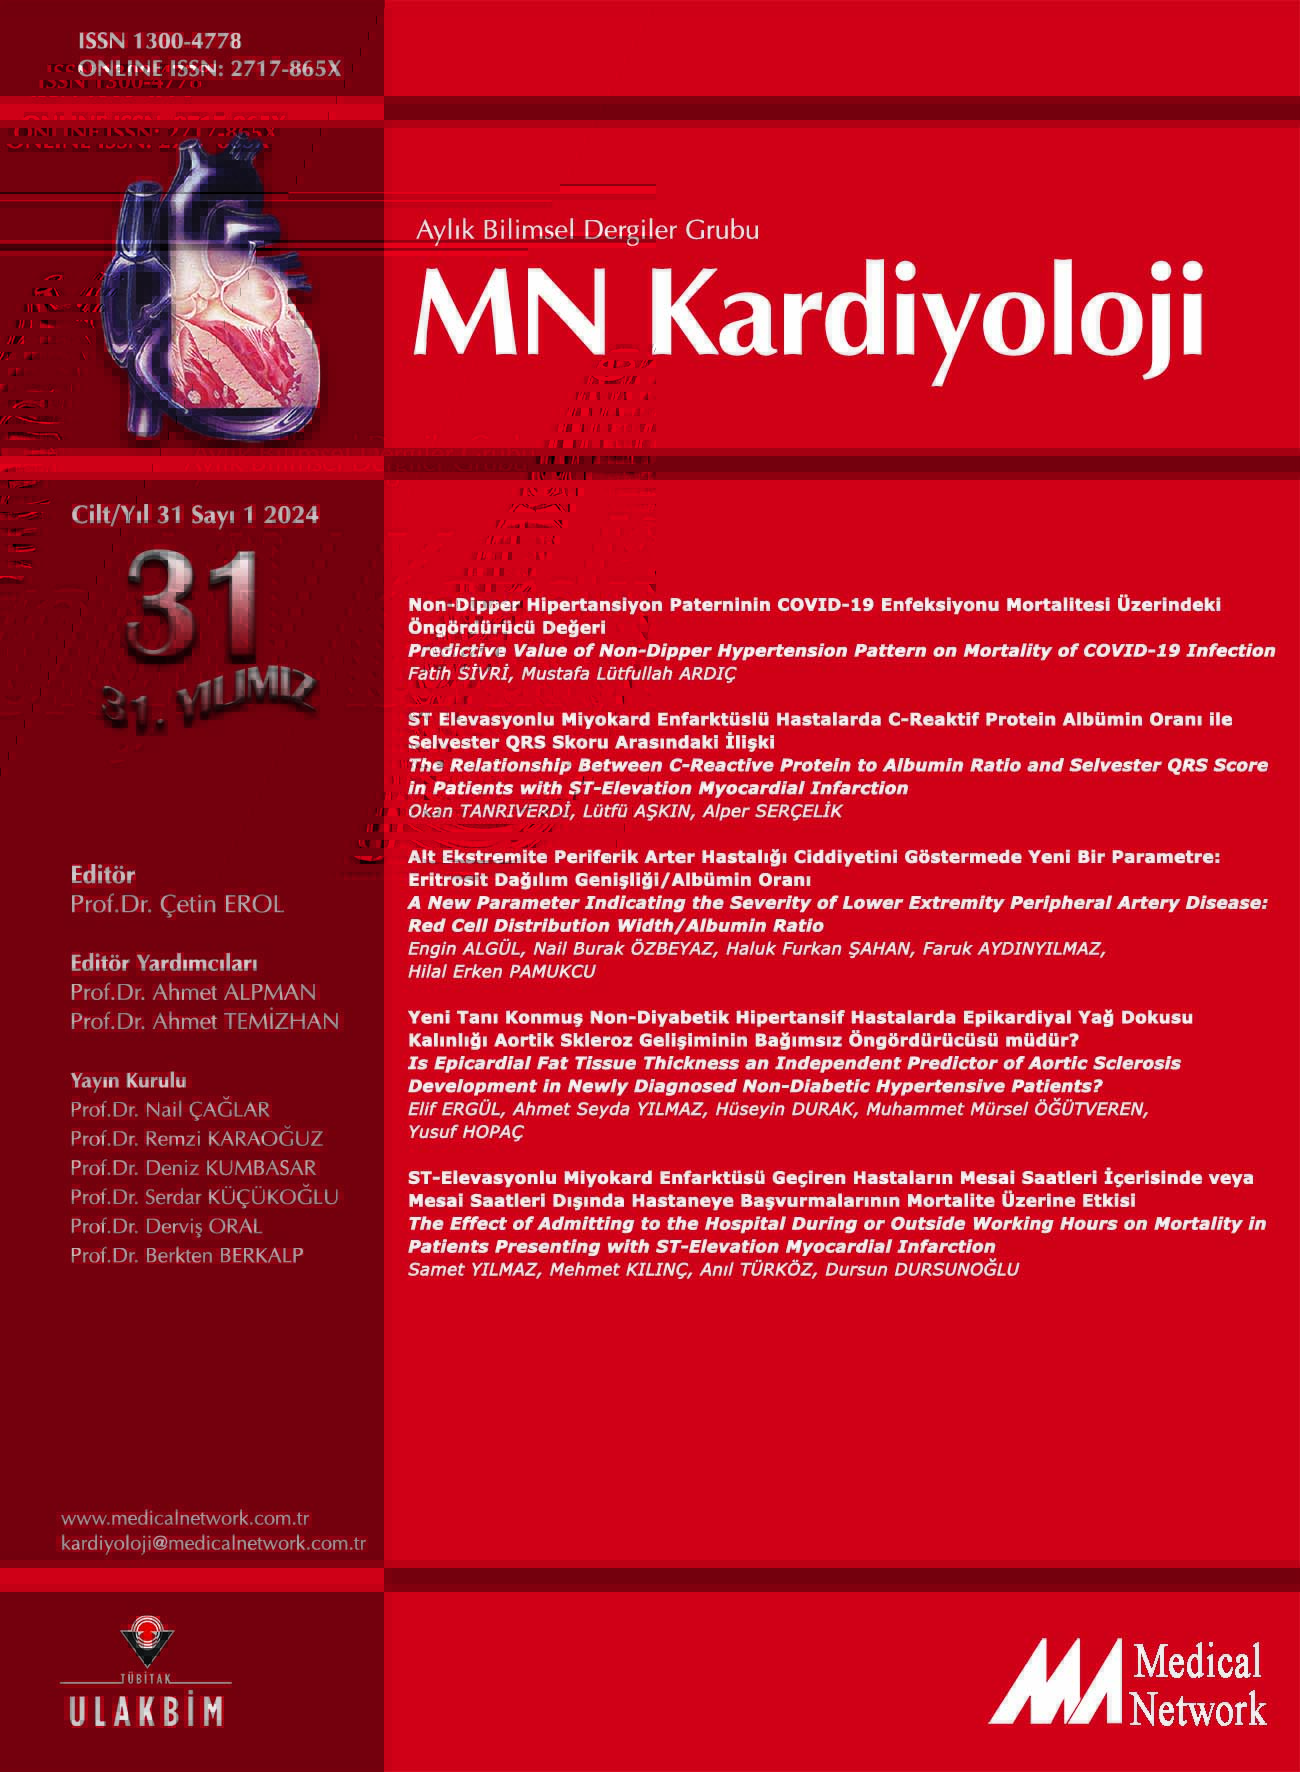 <p>MN Kardiyoloji Cilt: 31 Say: 1 2024 MN Cardiology Volume: 31 No: 1 2024</p>